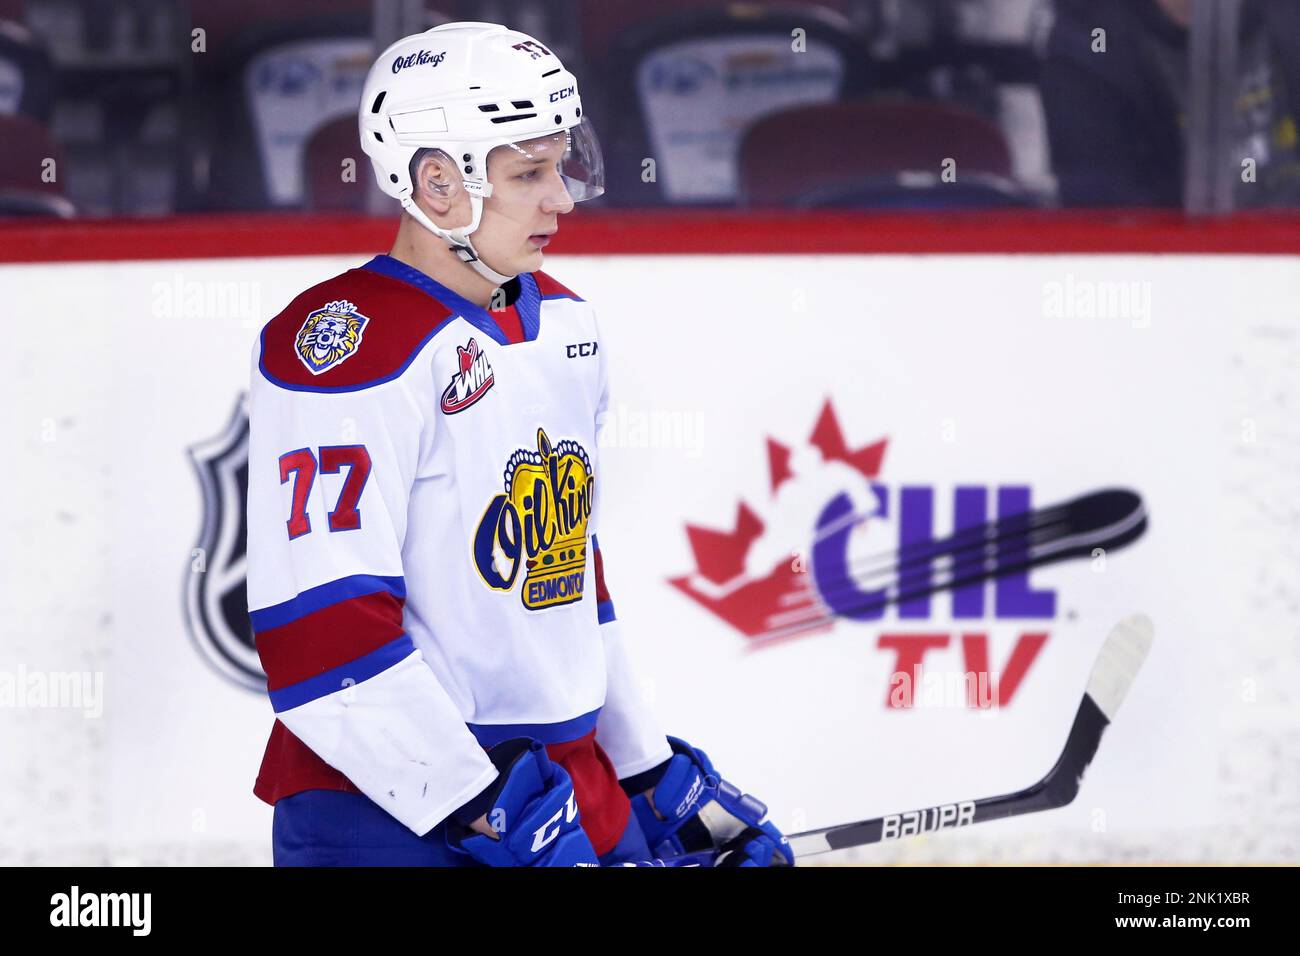 Profile photo on Edmonton Oil Kings player Jakub Demek, from Slovakia, during WHL (Western Hockey League)